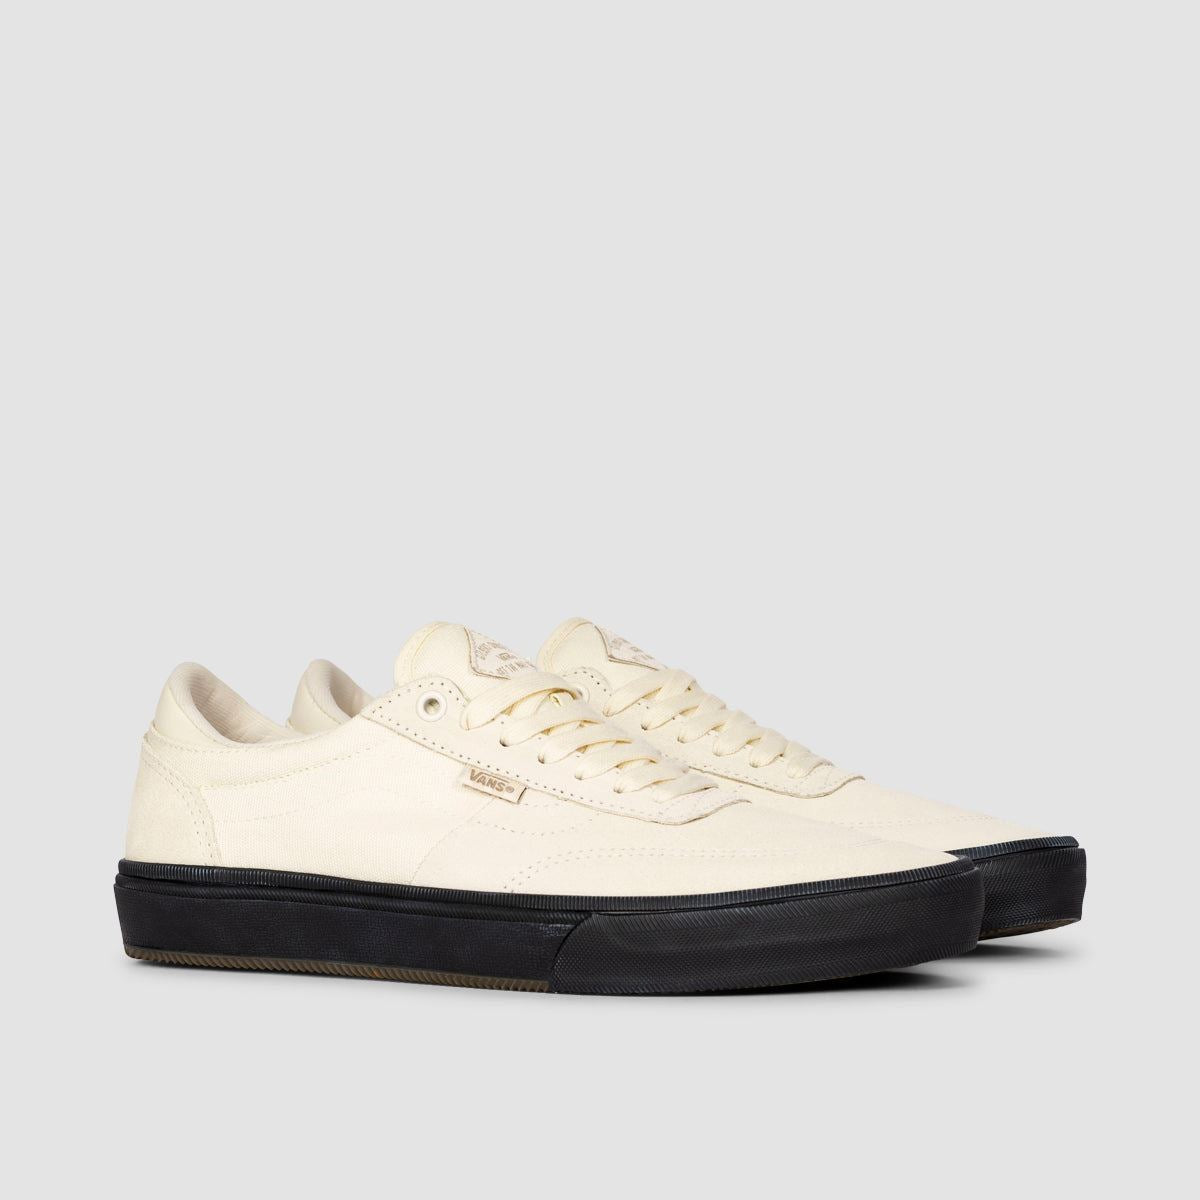 Vans Gilbert Shoes - Crockett Antique White/Black